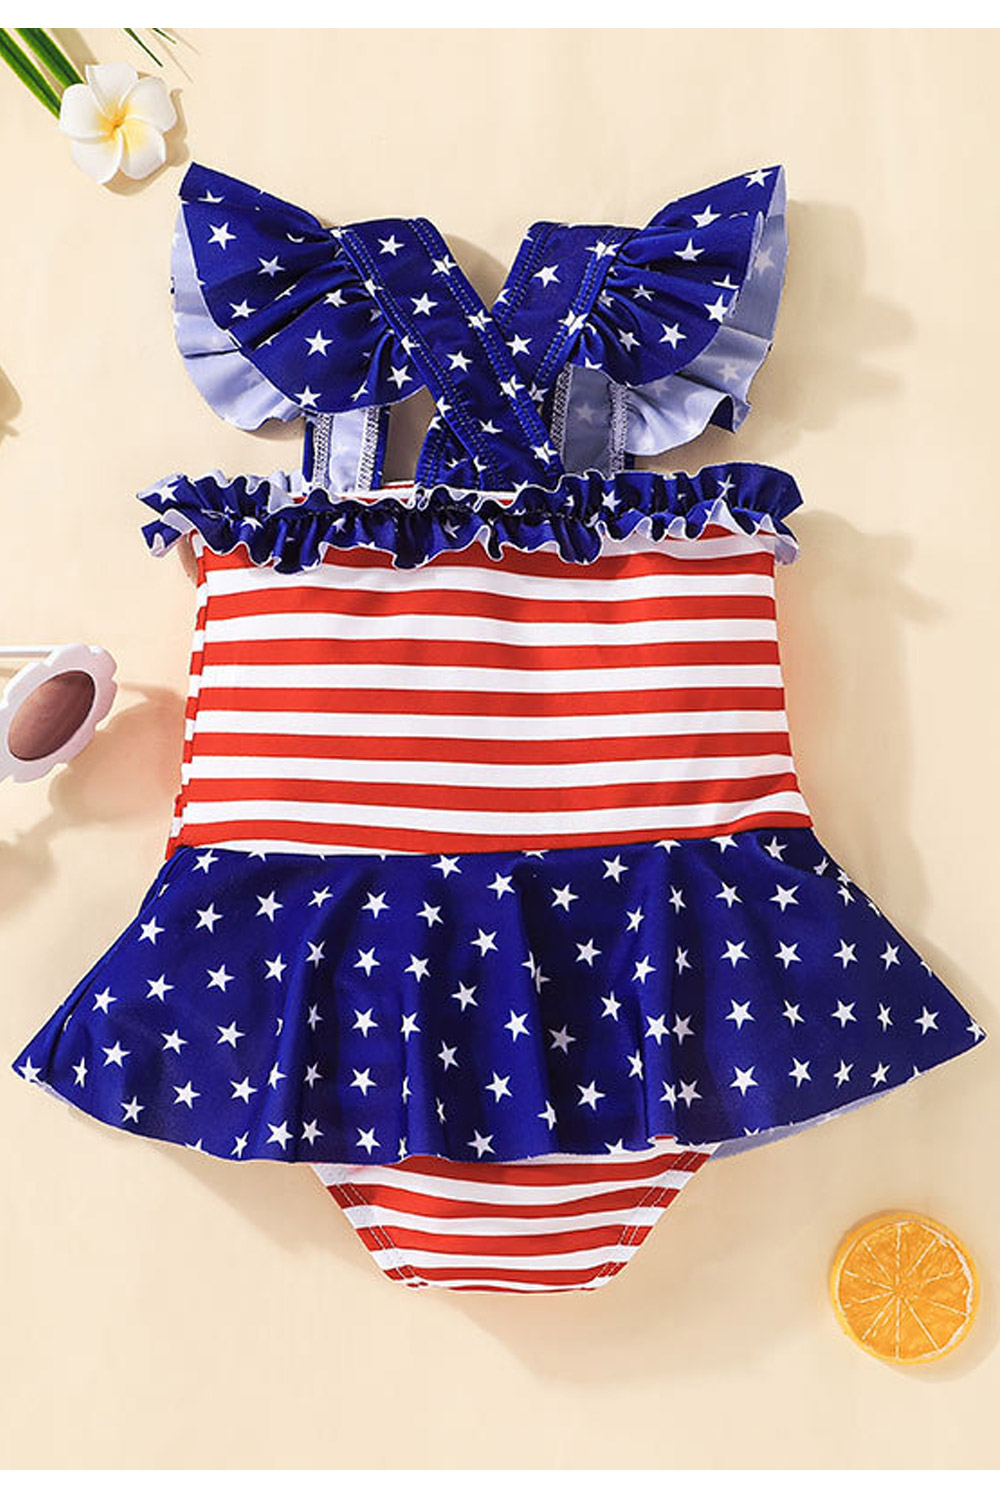 Zumeet Baby Girls Fashion Stripe Star Print Bow Romper Jumpsuit Headdress Suit